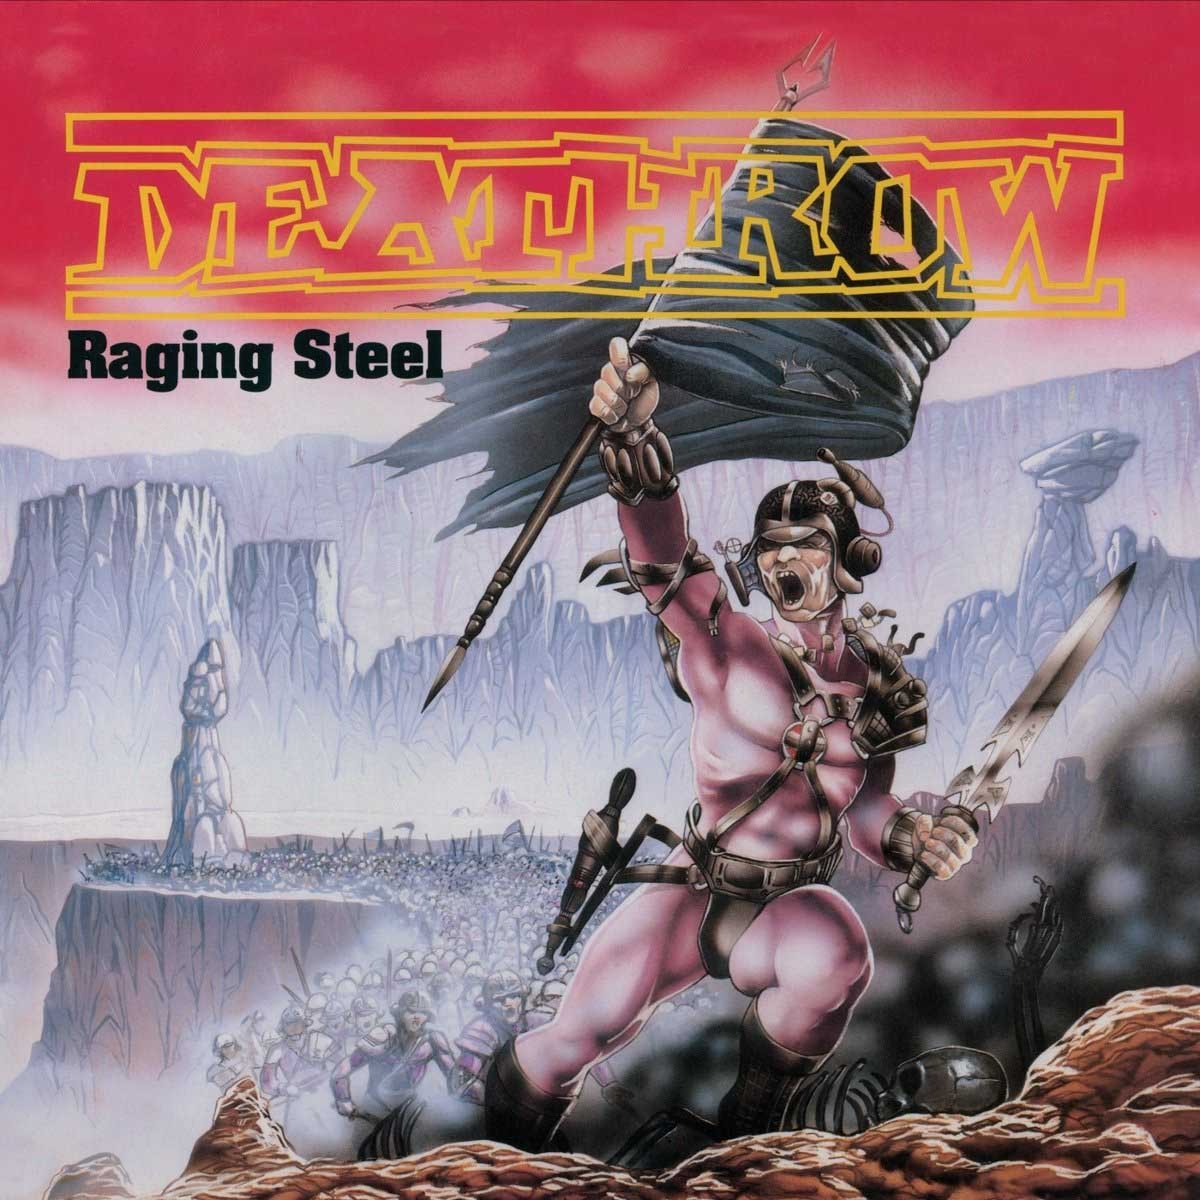 Deathrow "Raging Steel" Gatefold 2x12" Red Vinyl